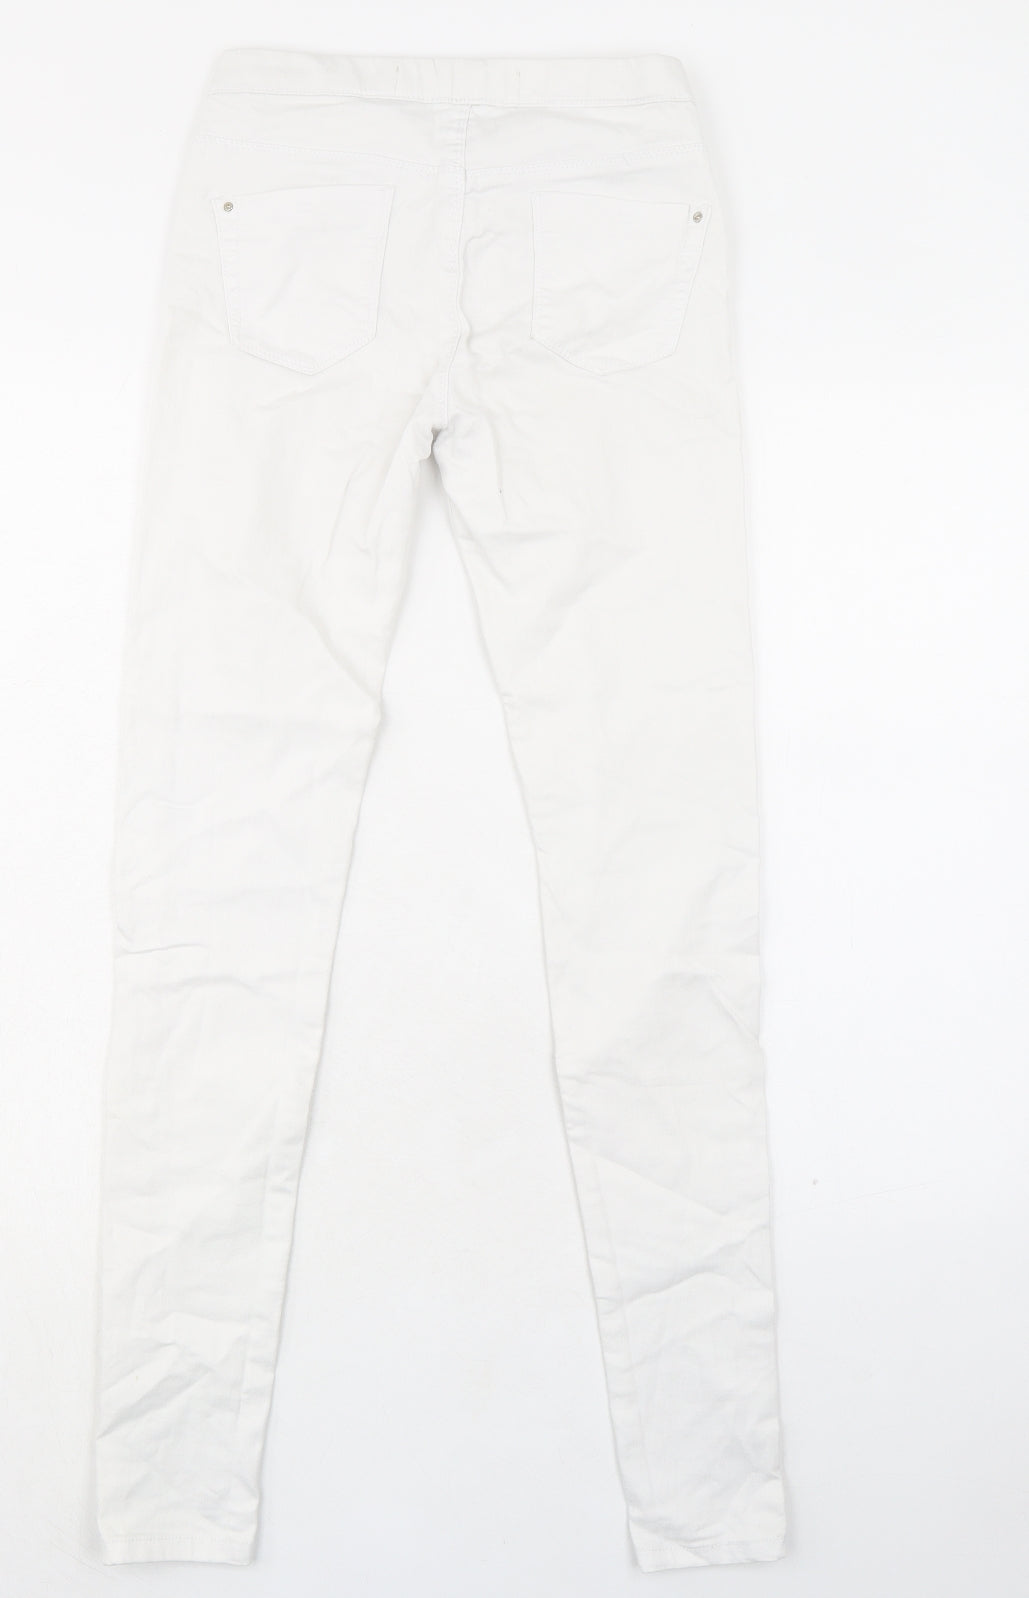 Denim & Co. Womens White Cotton Jegging Jeans Size 6 L31 in Regular